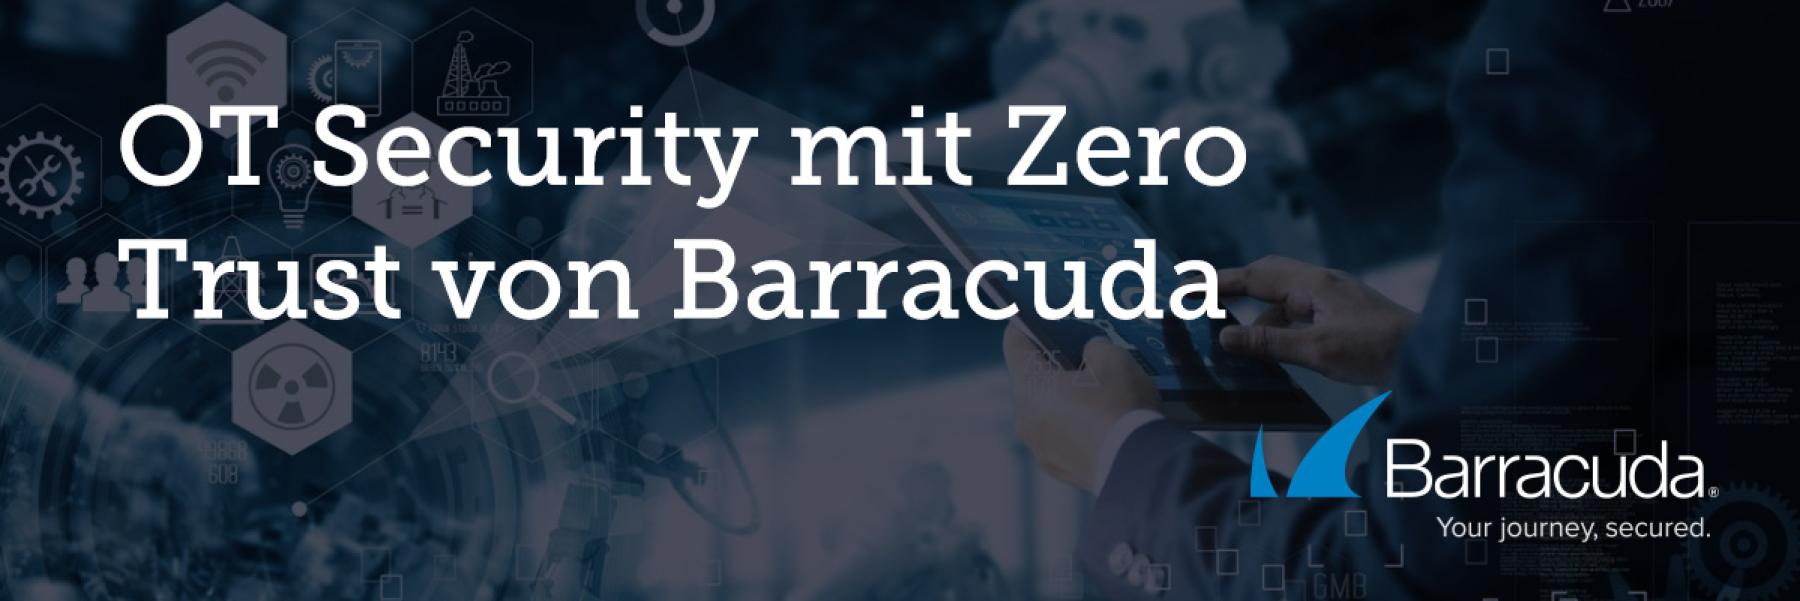 OT Security mit Zero Trust